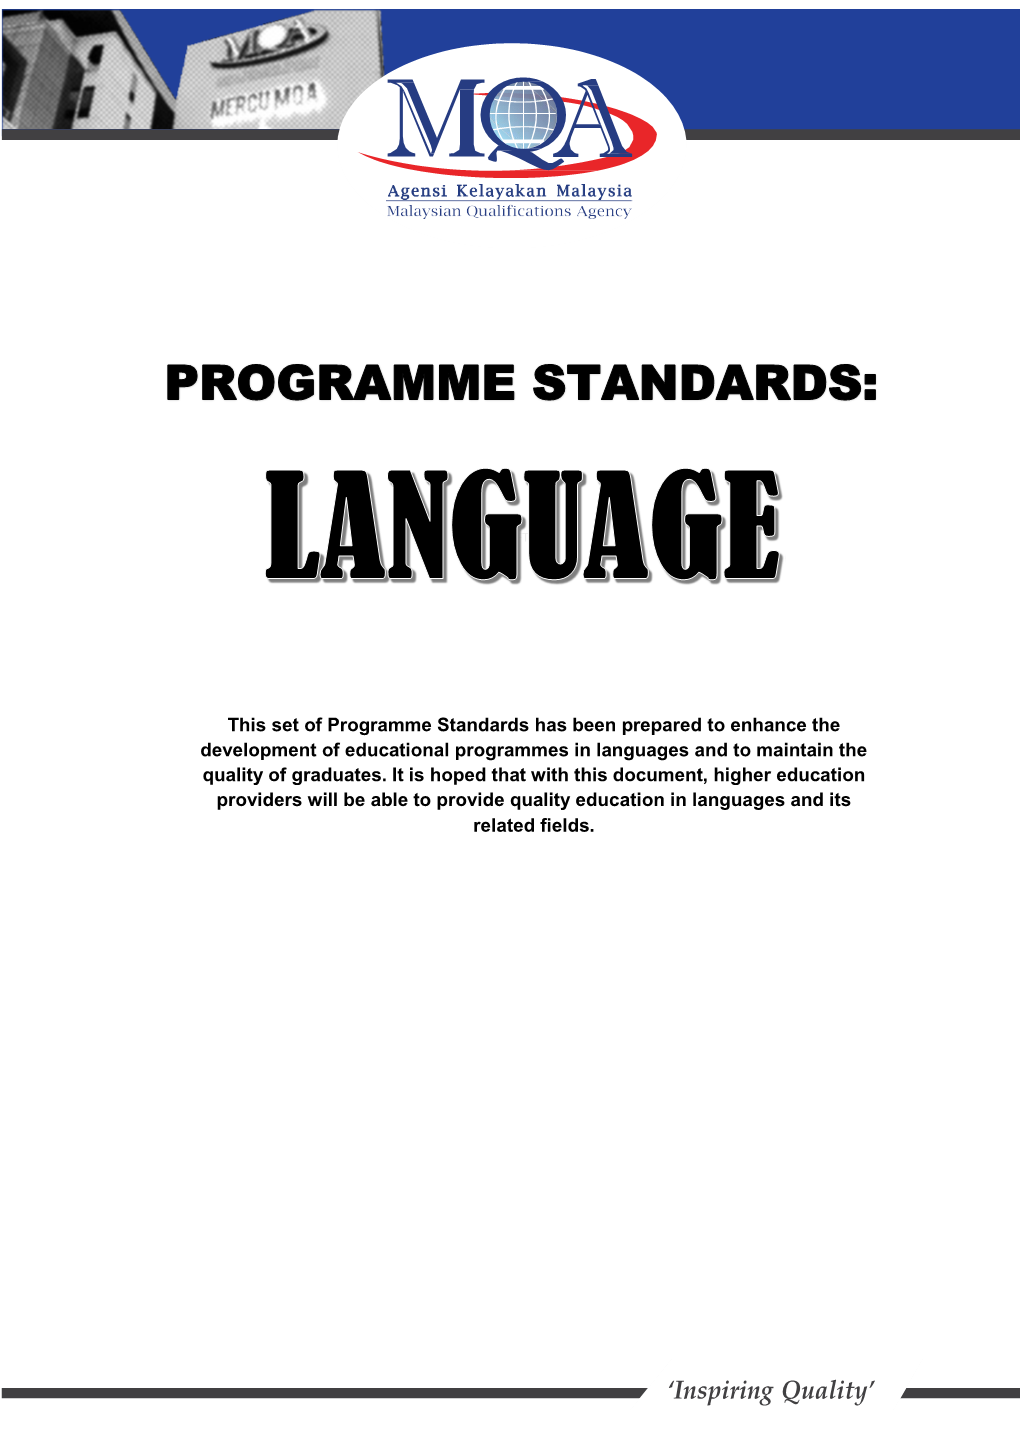 [Programme Standards: Language]